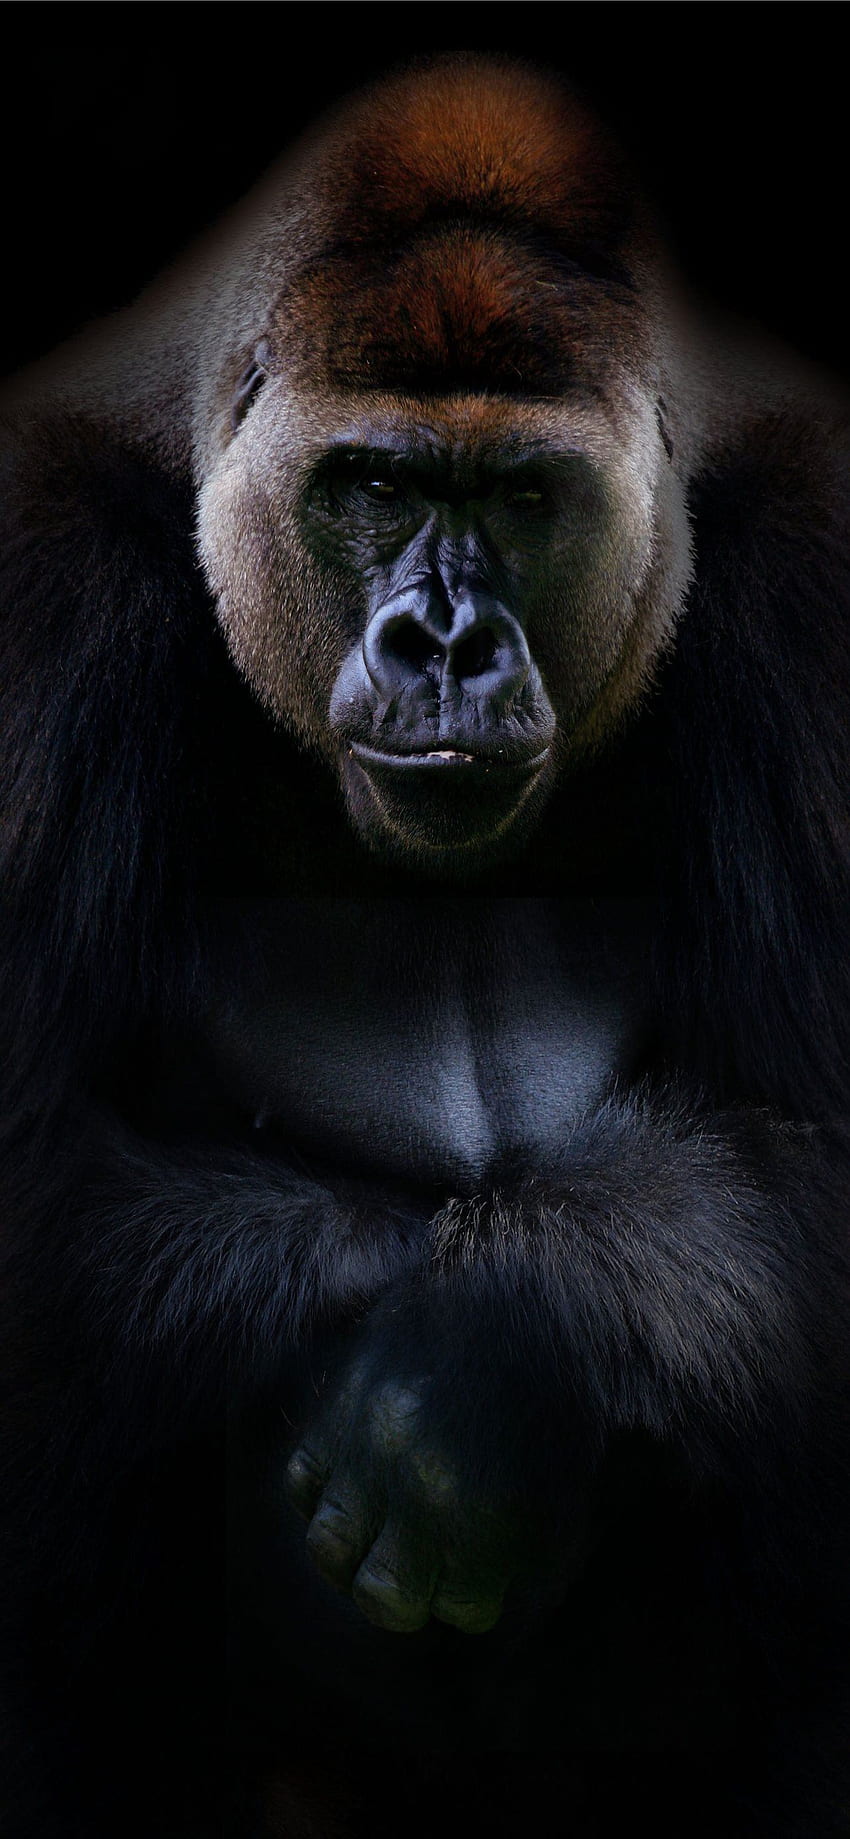 silverback gorilla wallpaper